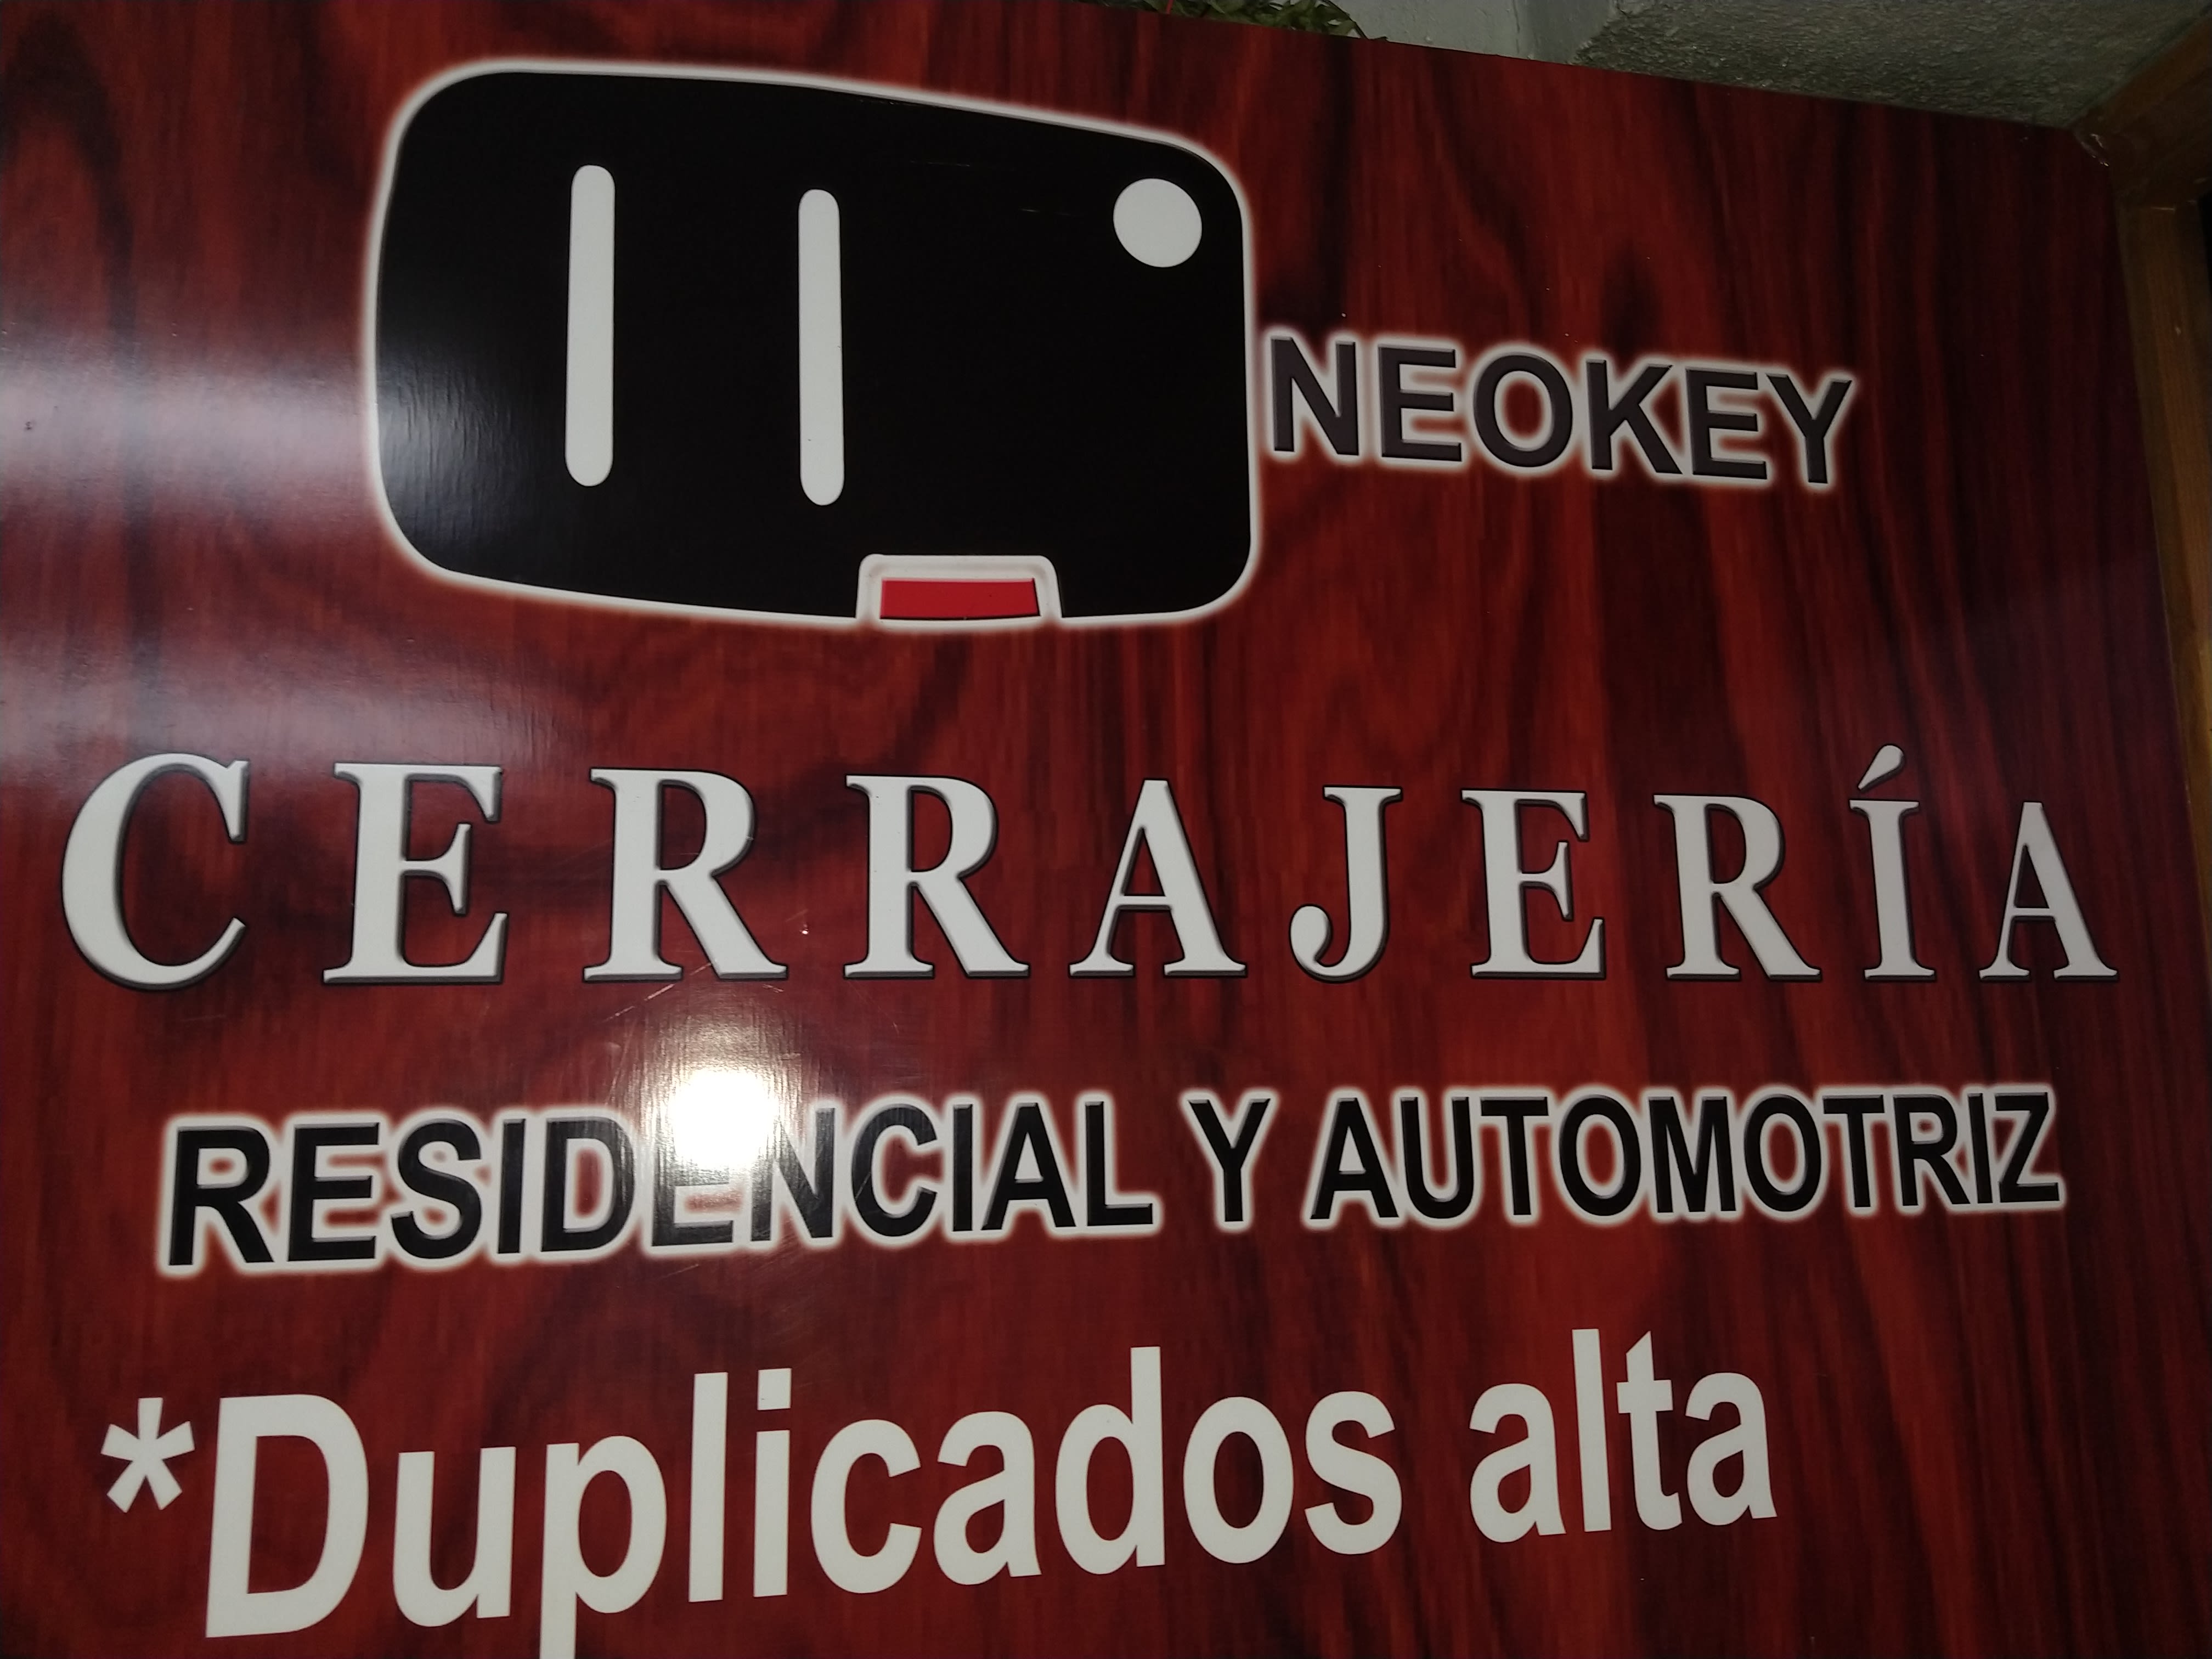 Cerrajeria Neokey